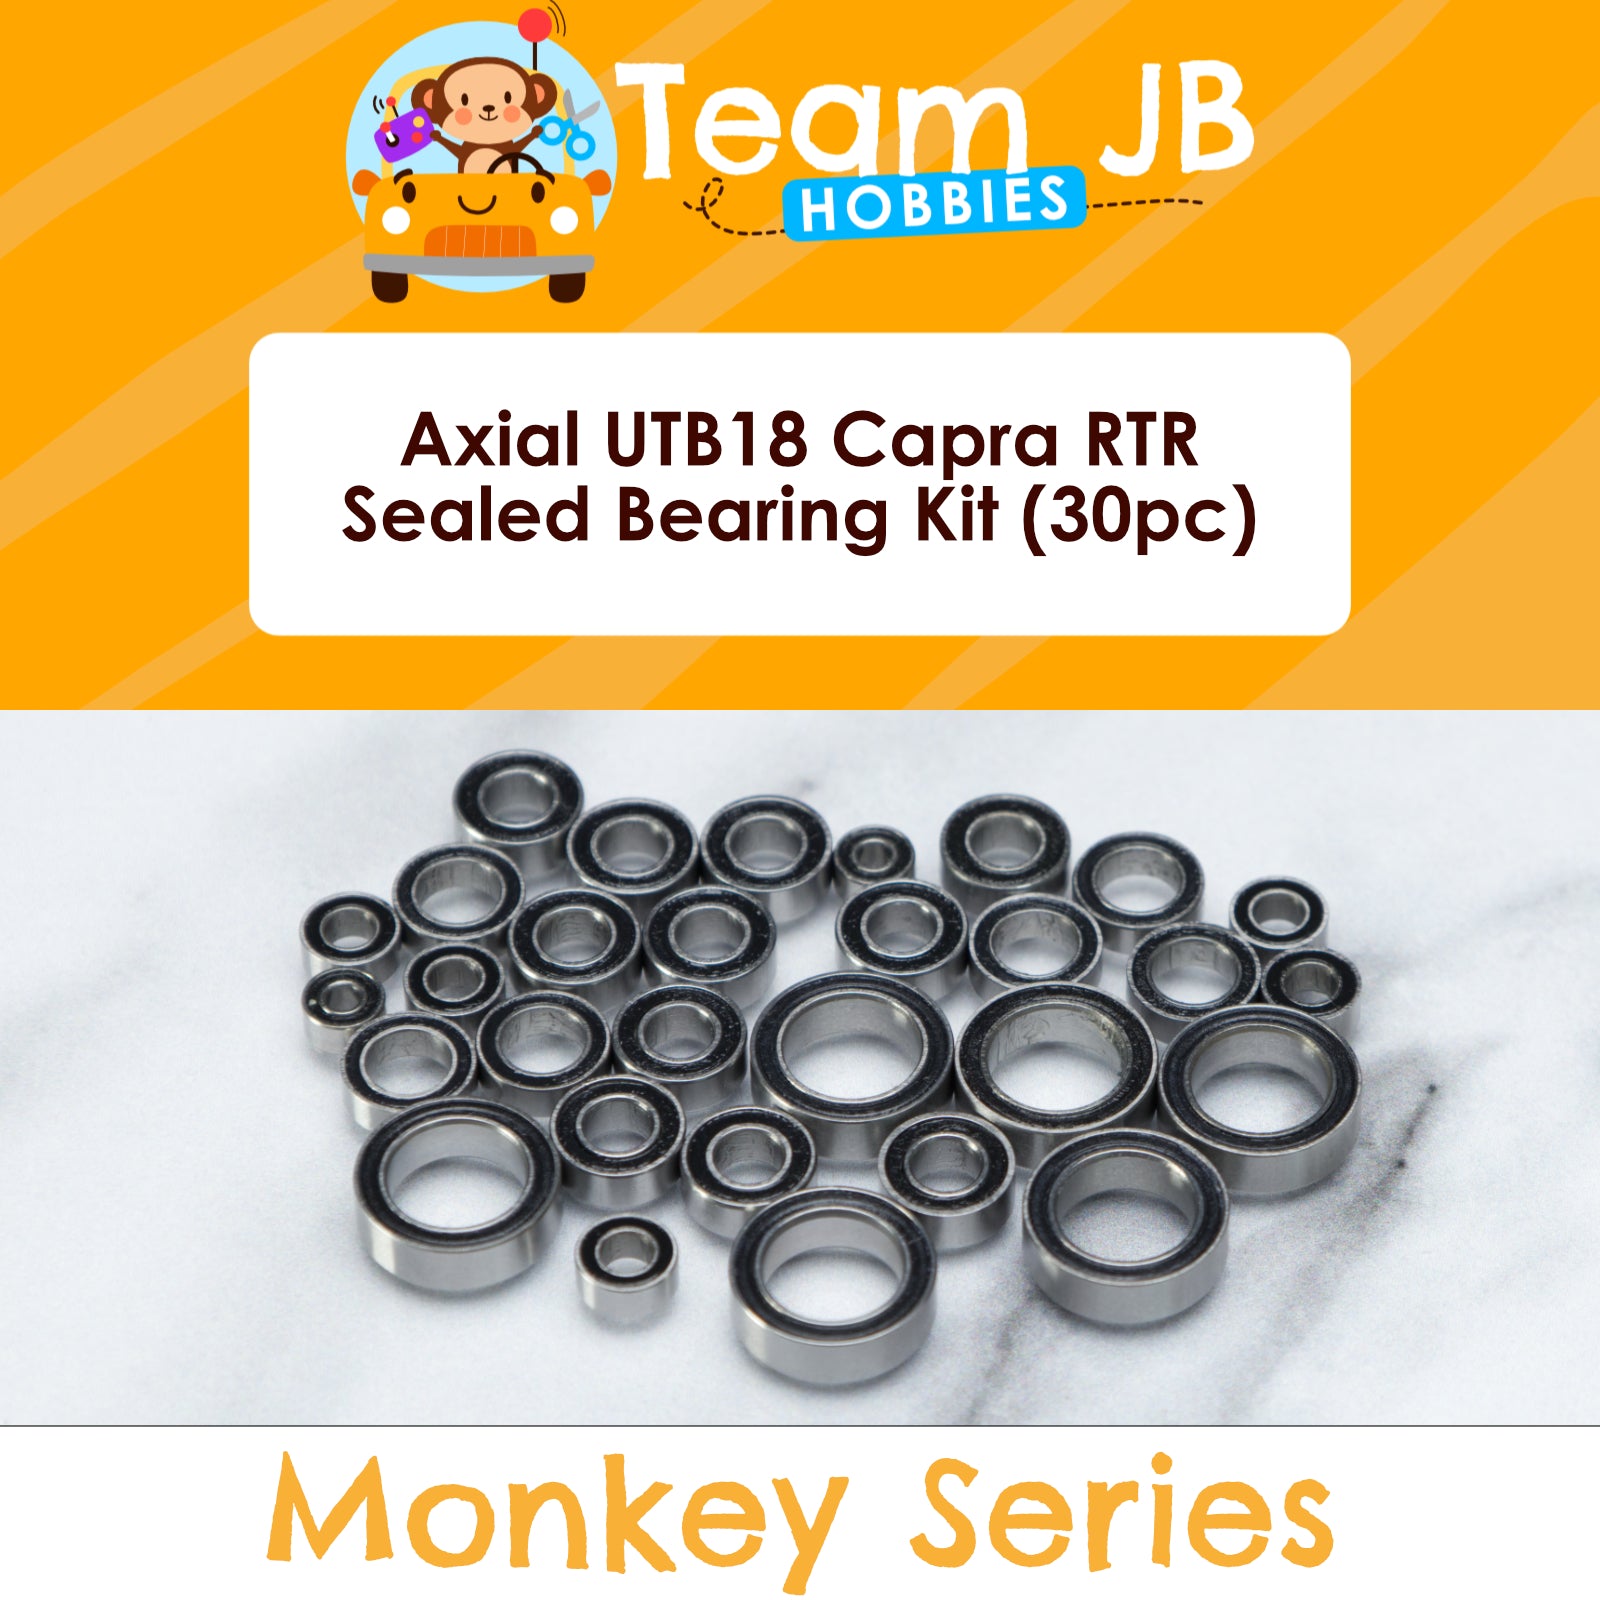 Axial UTB18 Capra RTR - Sealed Bearing Kit